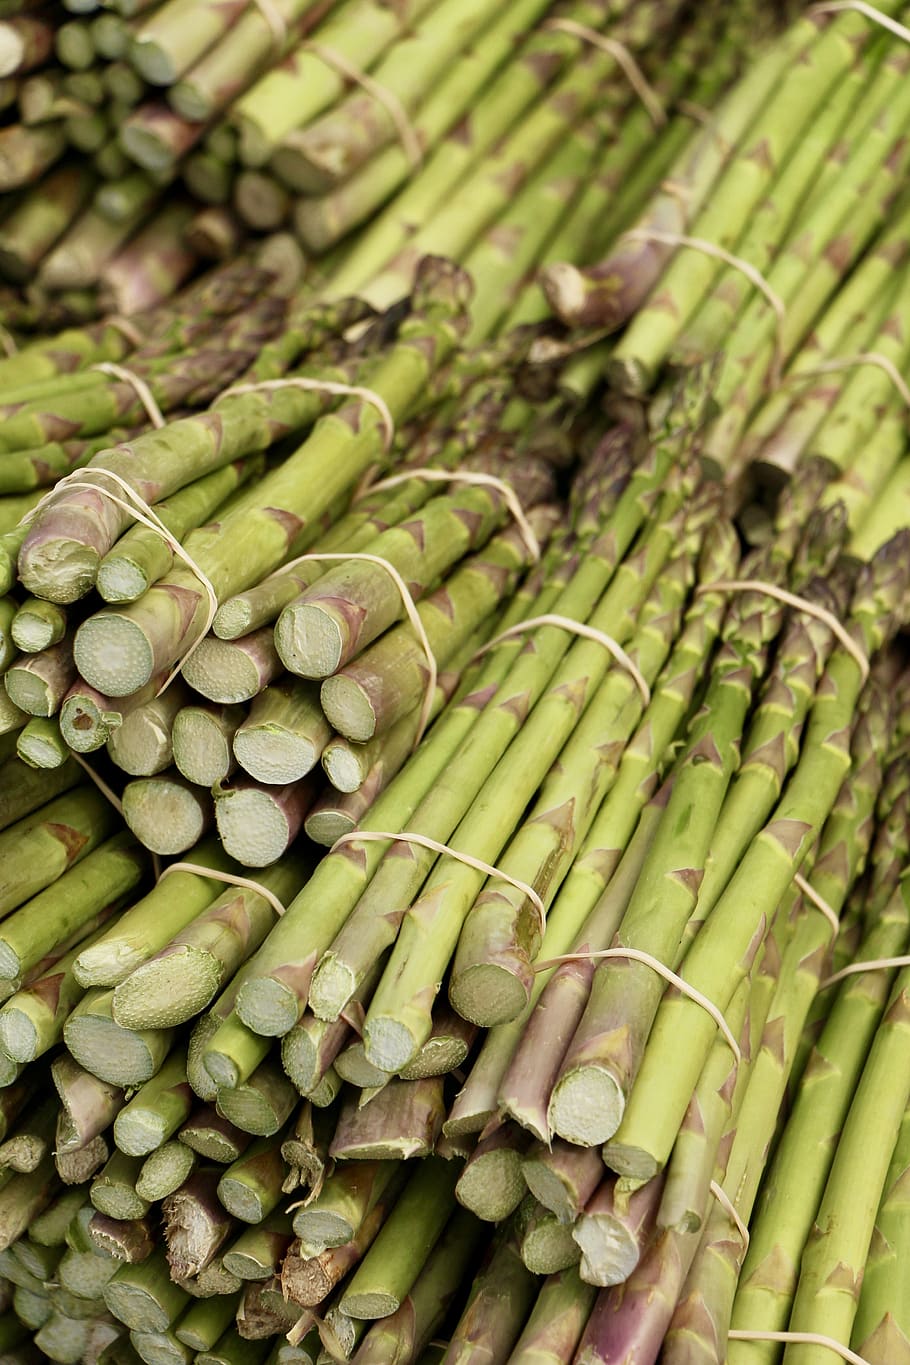 asparagus, green asparagus, green, vegetable, fruit and veg, green grocer, market, street market, produce market, farm